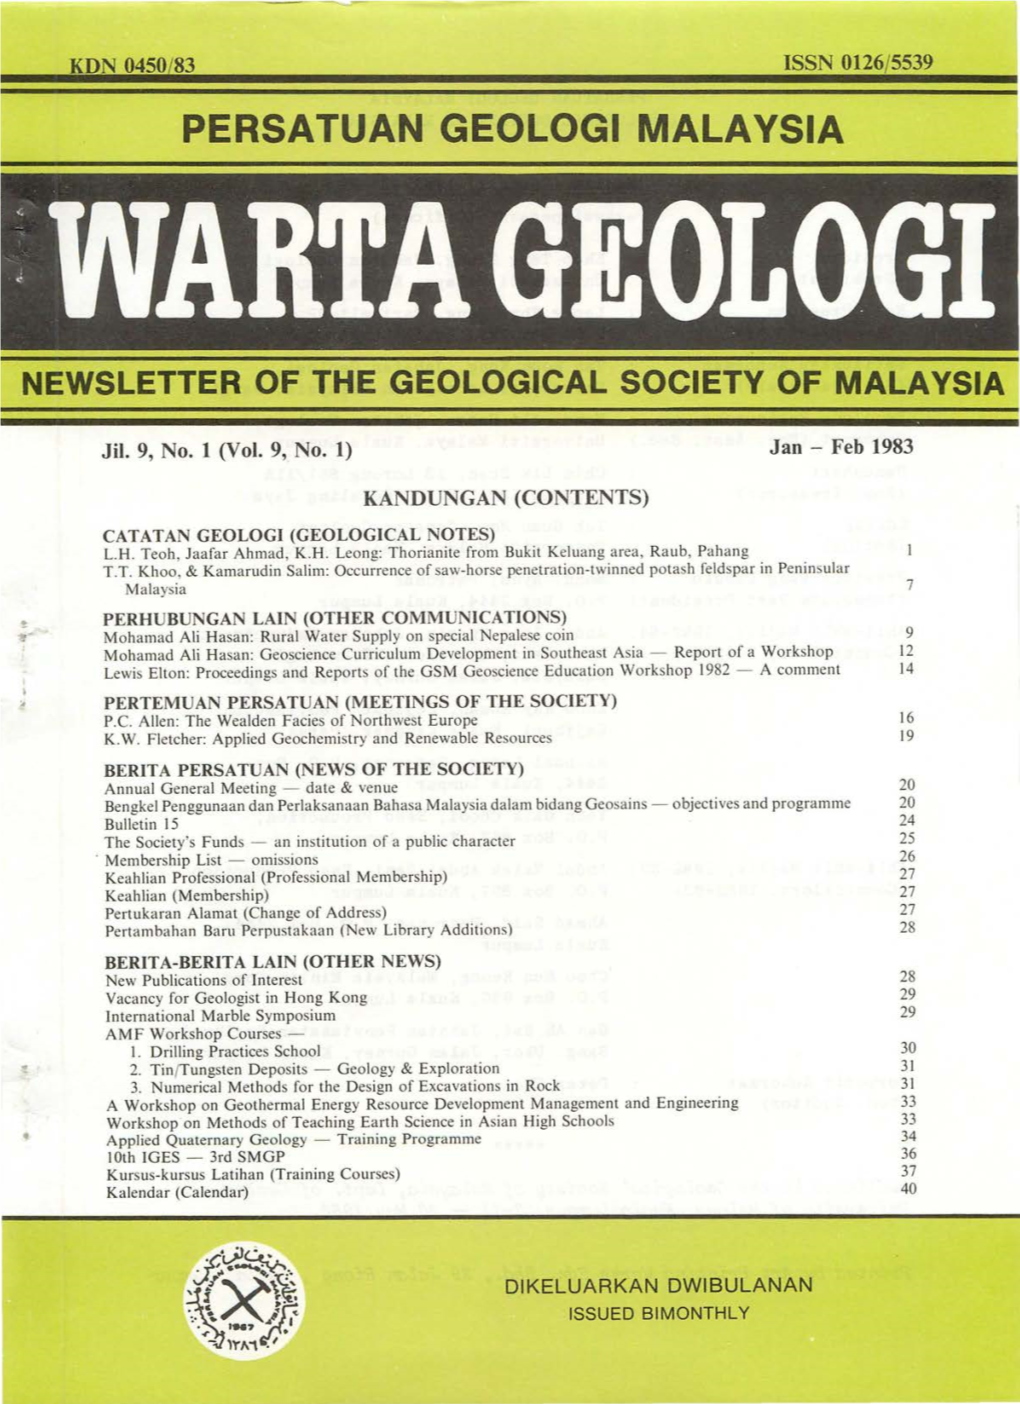 Persatuan Geologi Mala Vsia